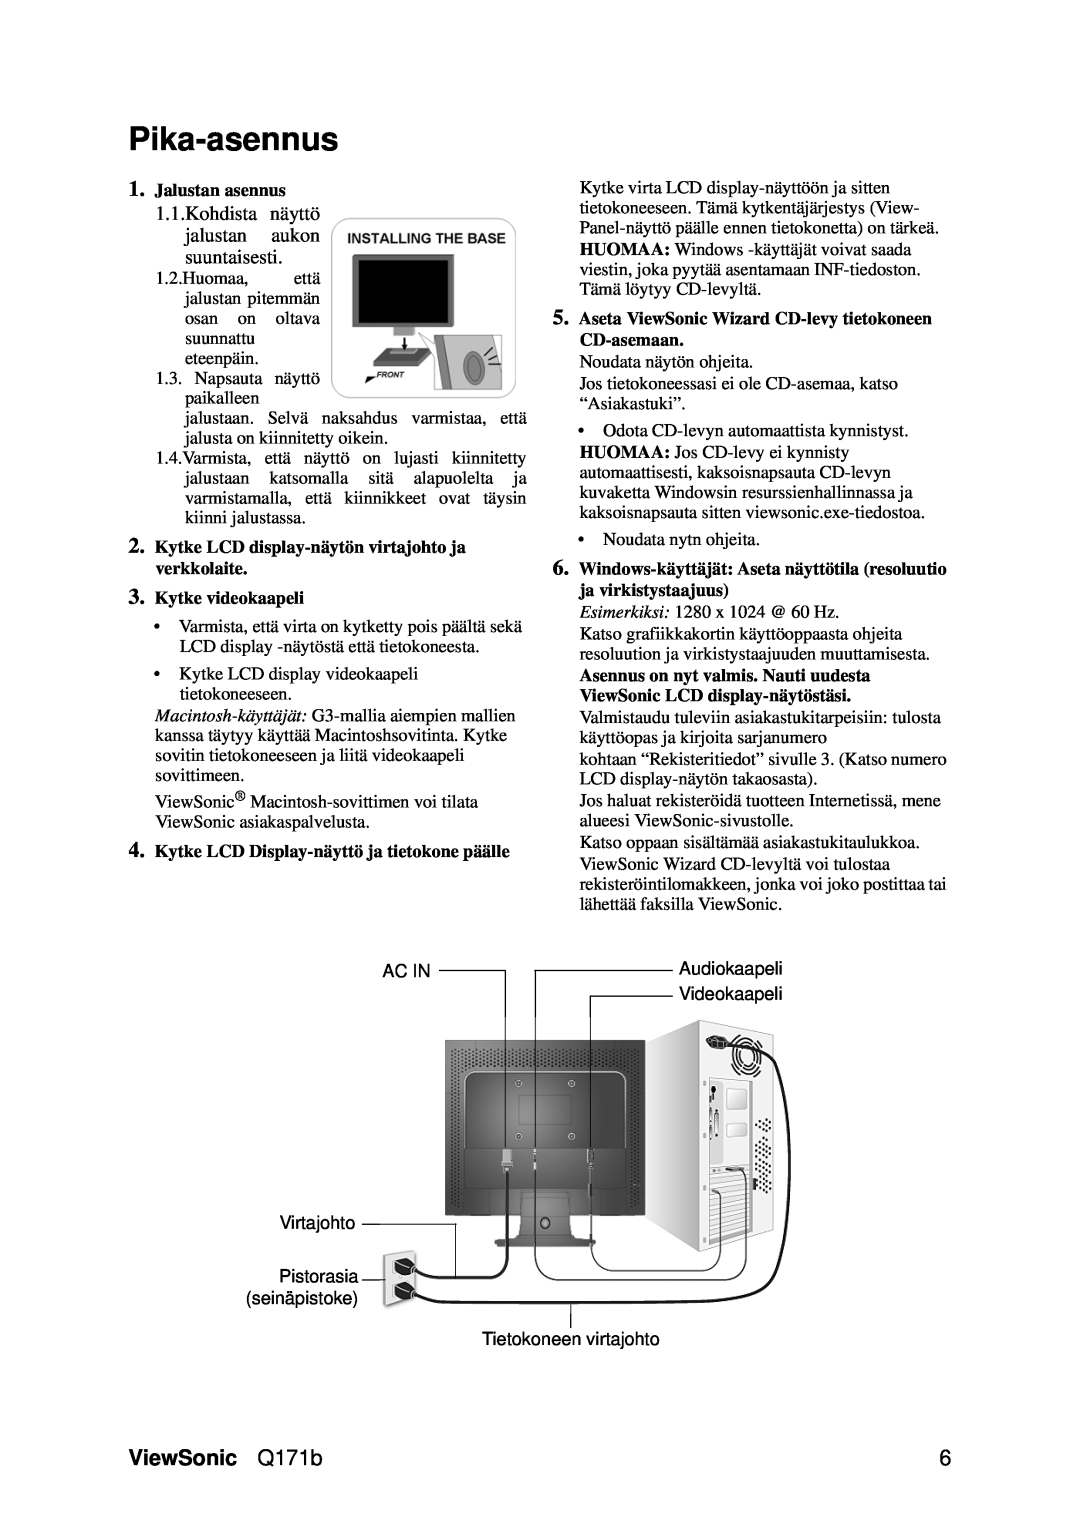 Optiquest VS11351 Pika-asennus, ViewSonic Q171b, Jalustan asennus, Kytke LCD display-näytön virtajohto ja verkkolaite 